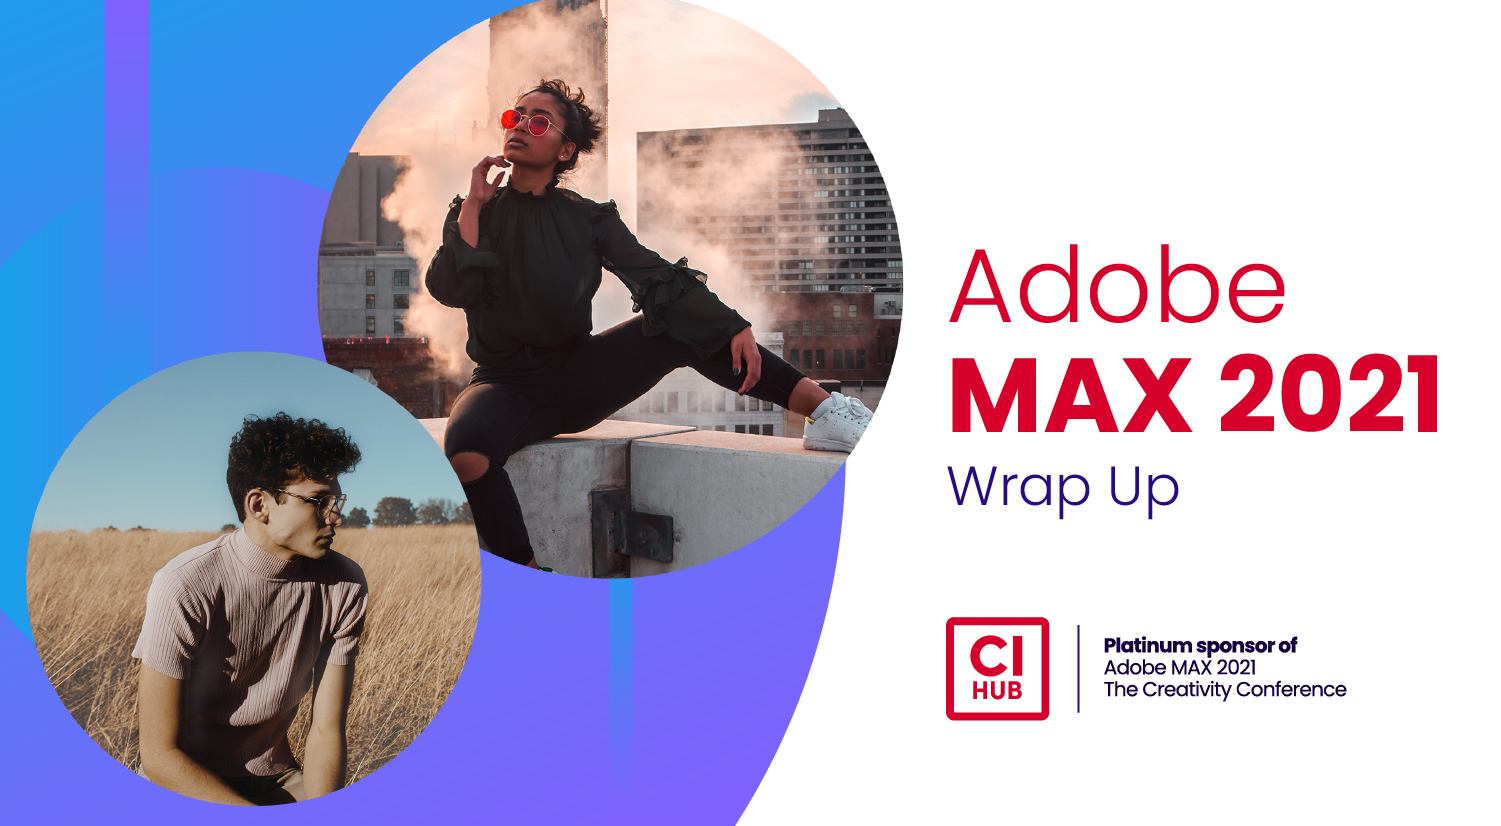 Adobe MAX 2021 Wrap Up